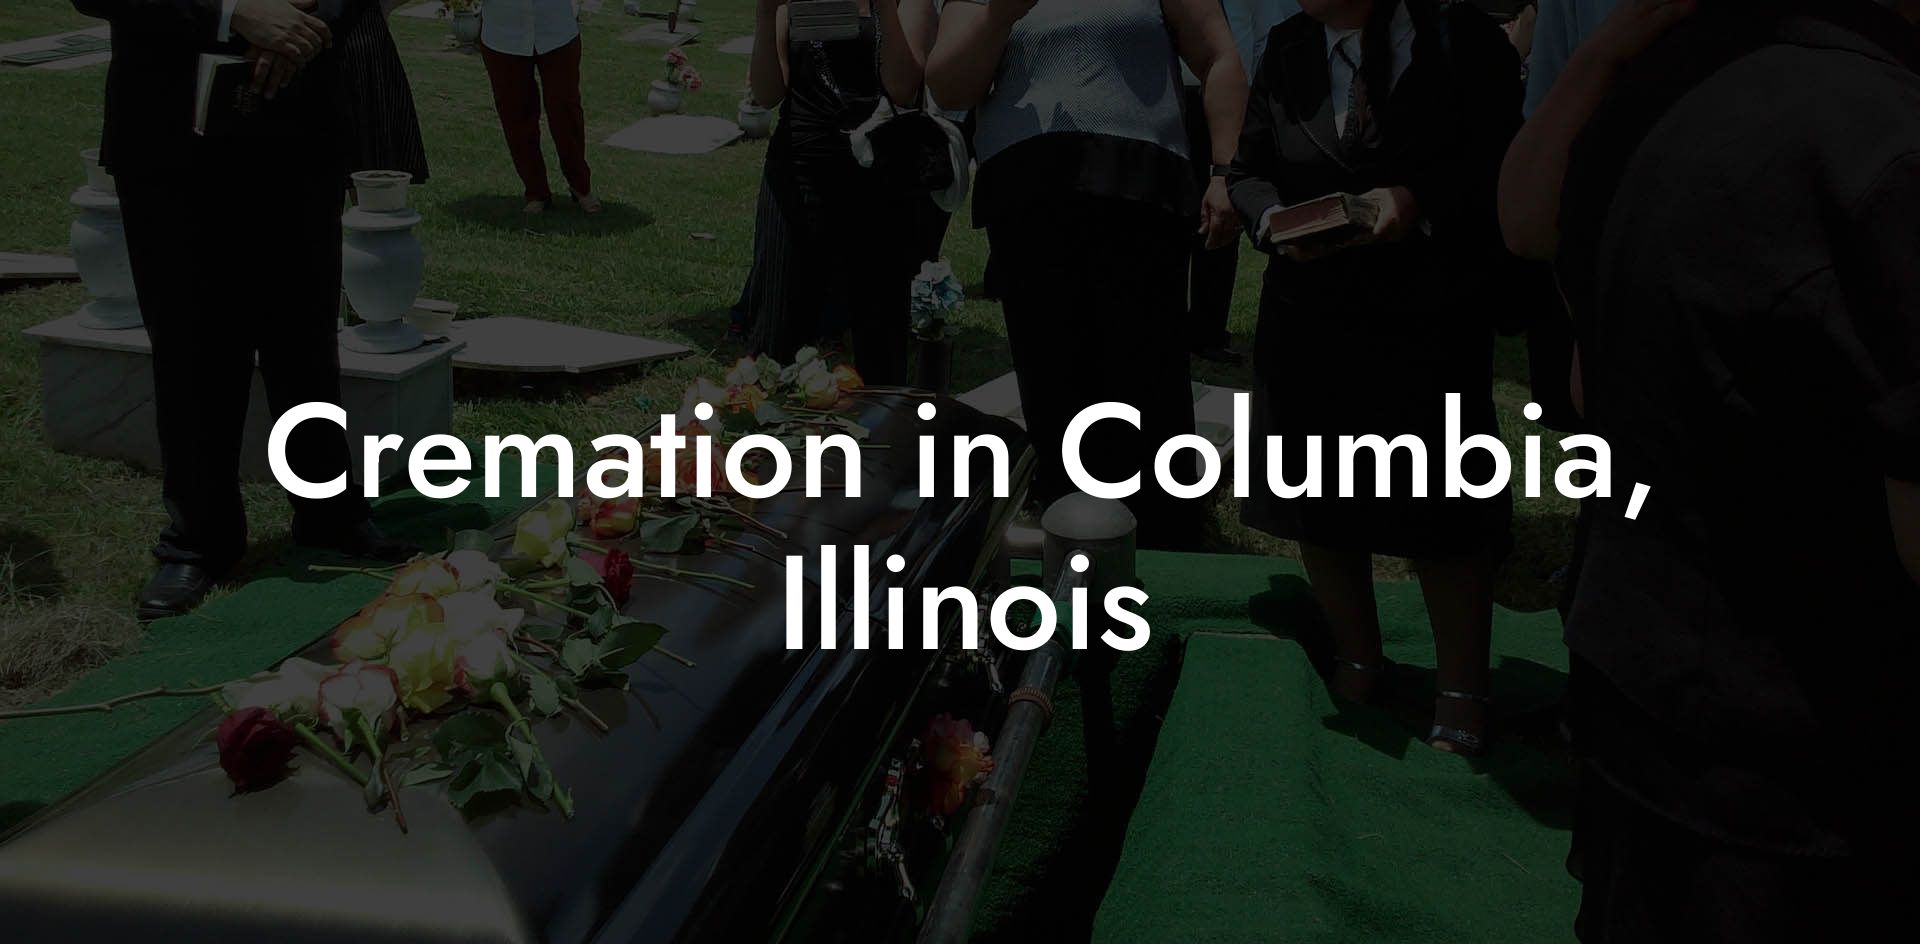 Cremation in Columbia, Illinois